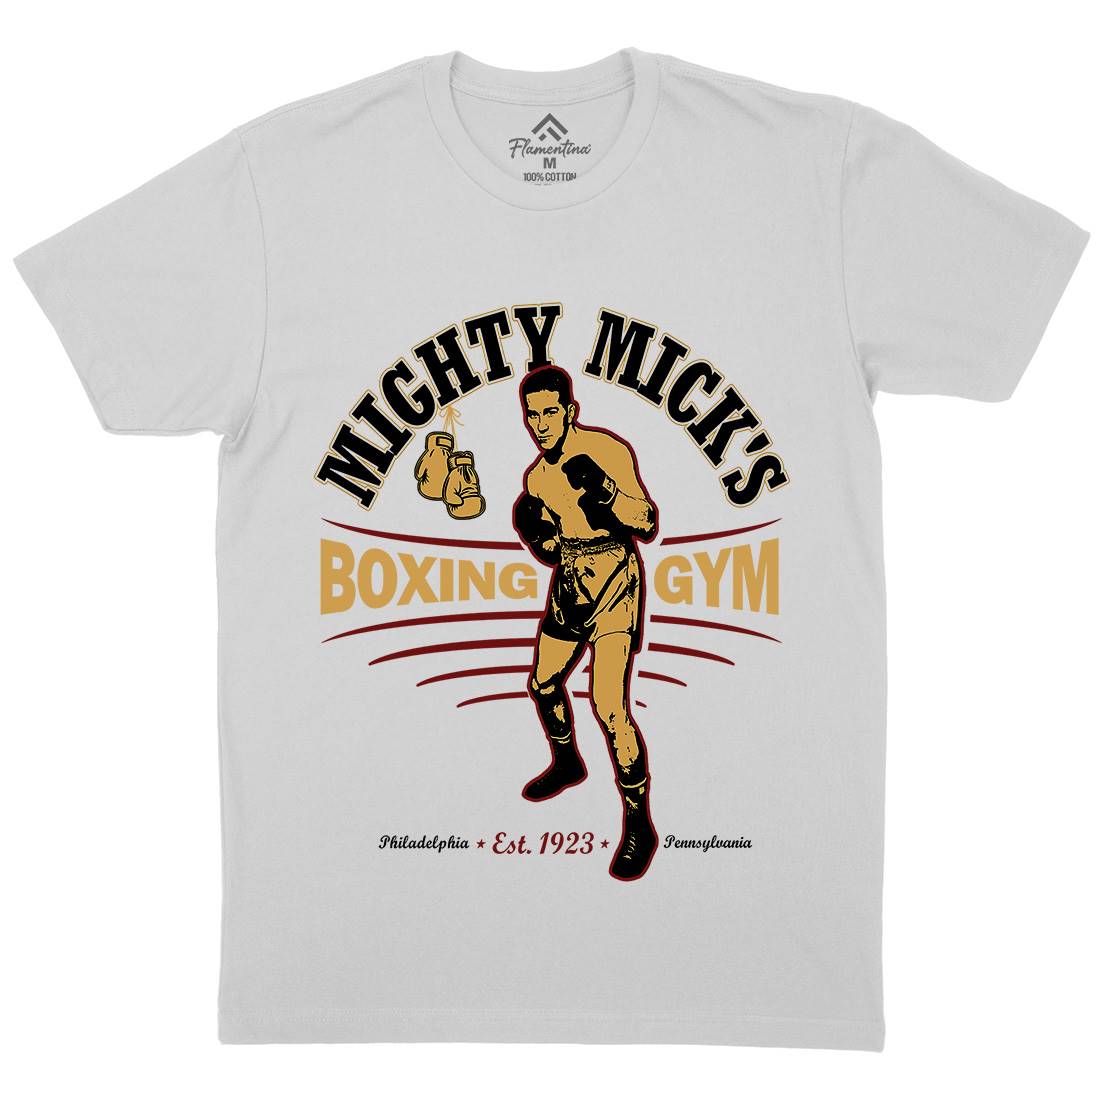 Mighty Micks Gym Mens Crew Neck T-Shirt Sport D276